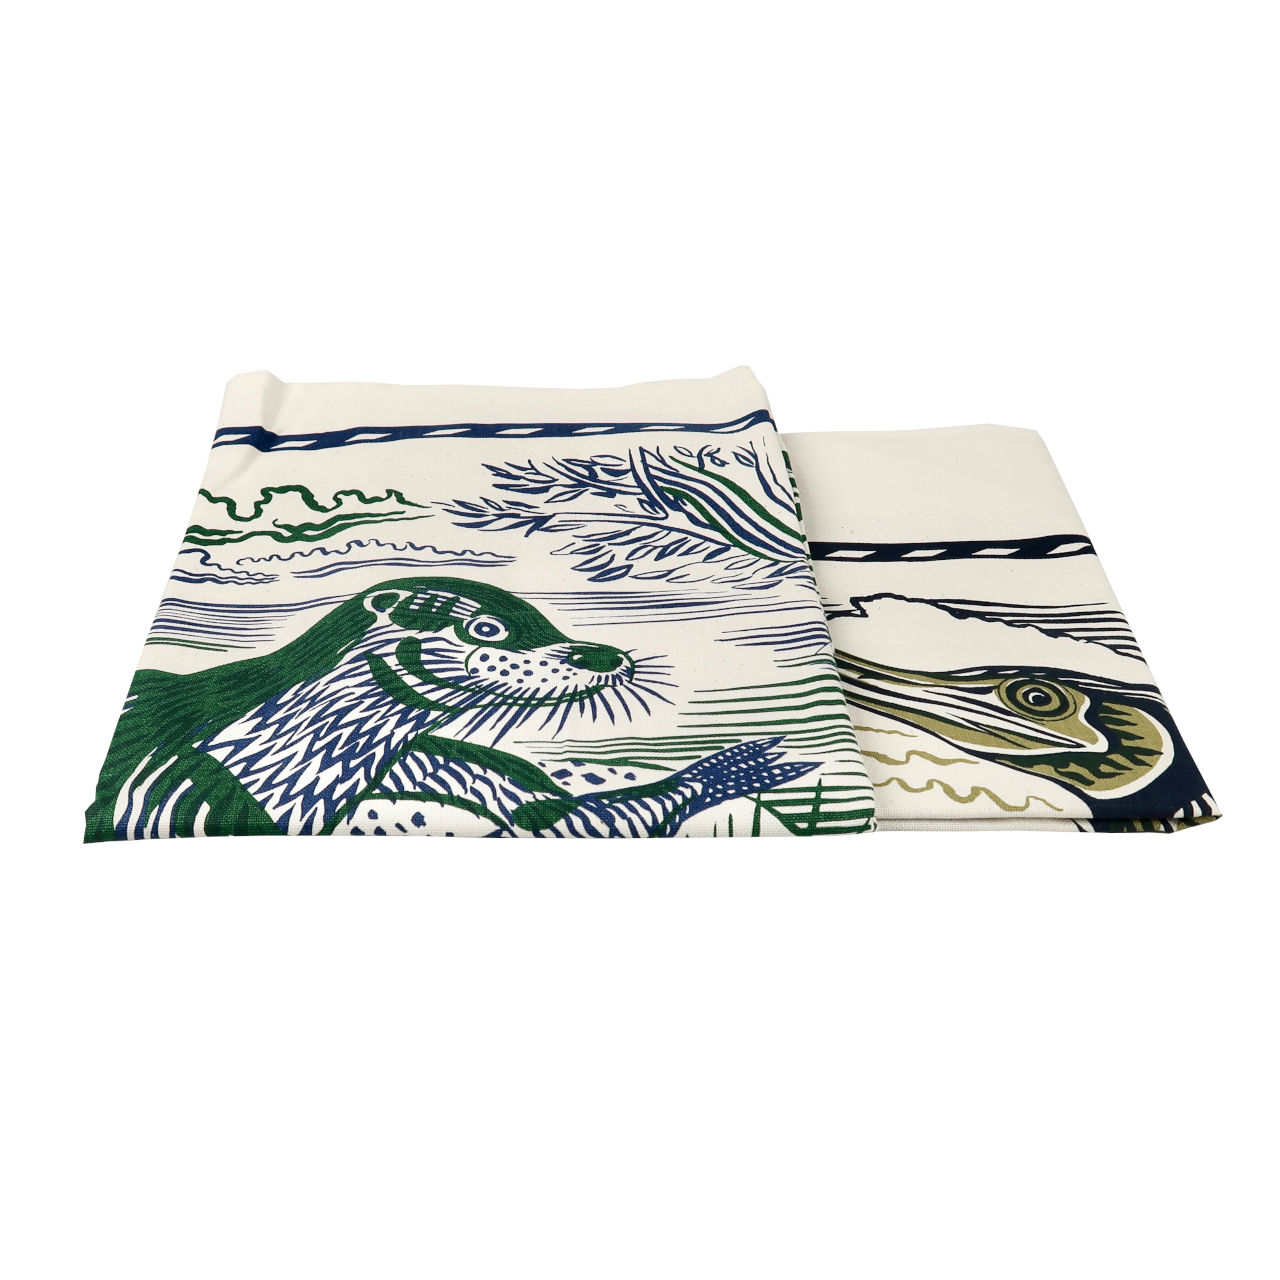 Richard Bawden Set of 2 Tea Towels - Otter & Cormorant